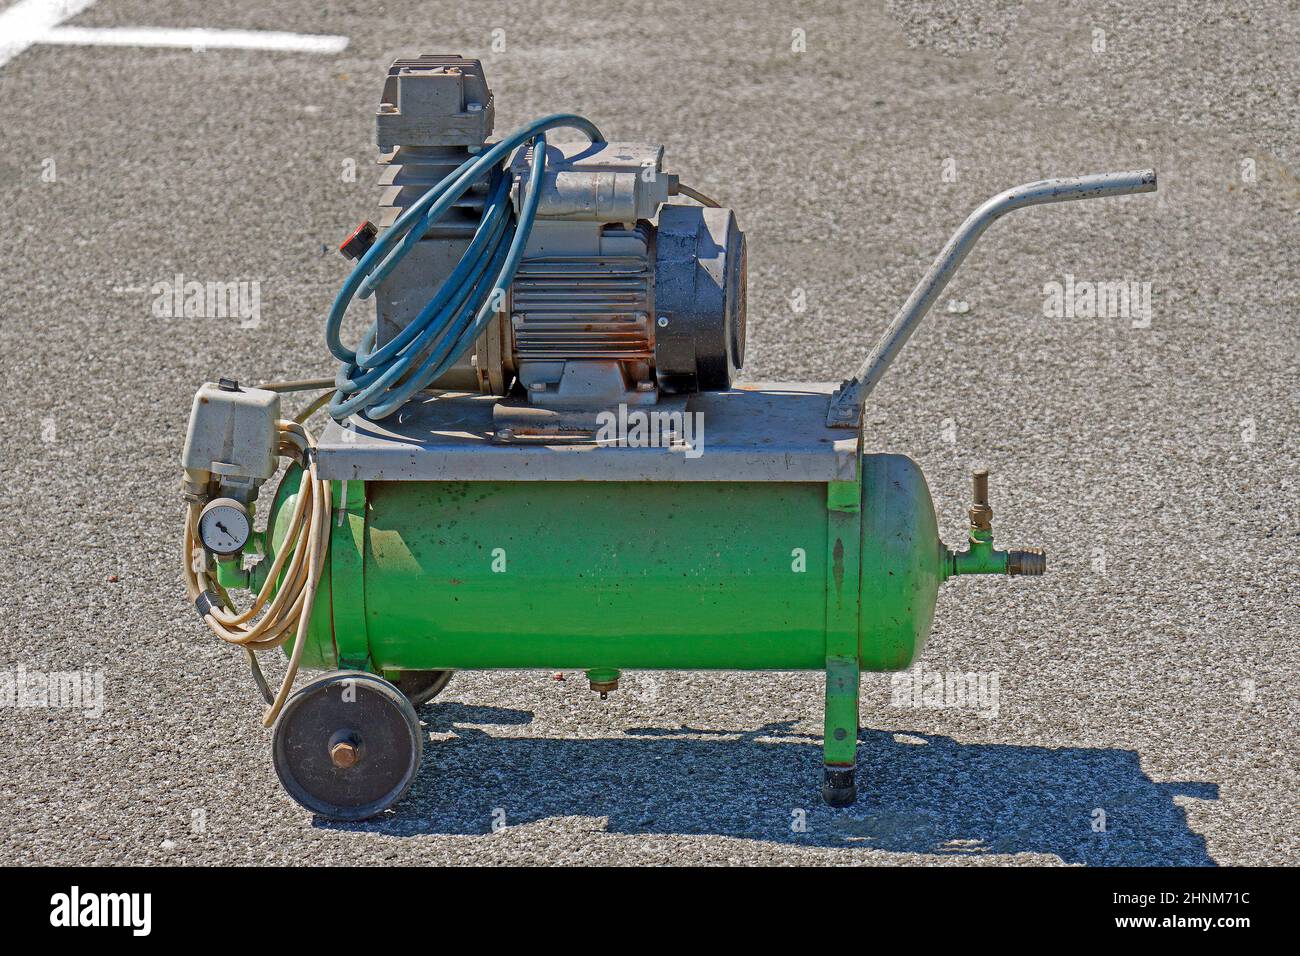 Air compressor on pavement Stock Photo